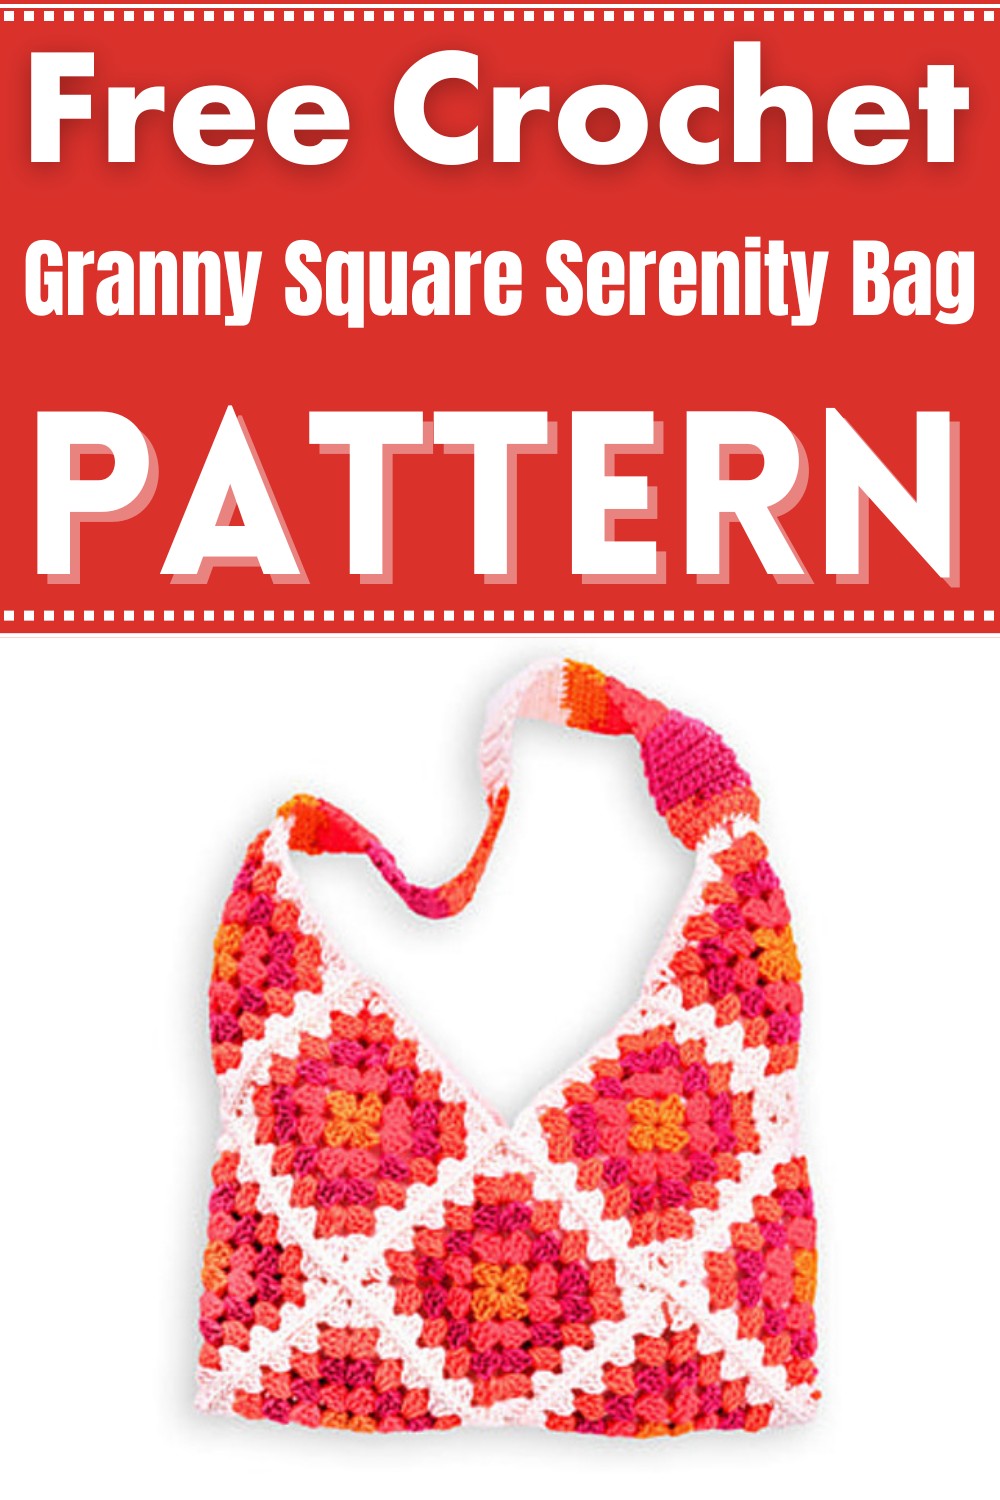 Crochet Granny Square Serenity Bag Pattern